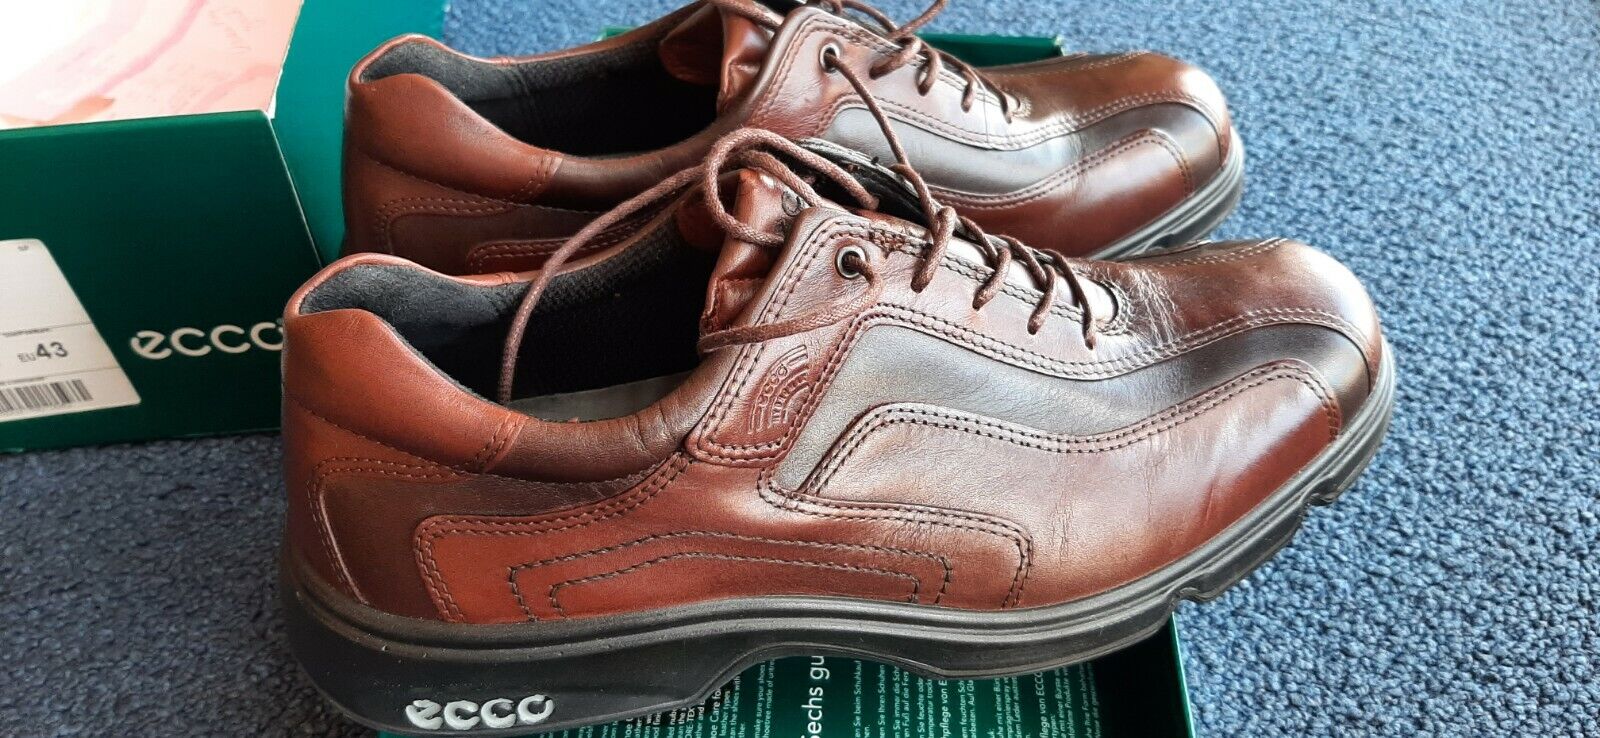 NEW ECCO TOUR HYBRID BISON/BROWN/ Men\'s Golf Shoes 43. USA size 9 - 9 1/2.  